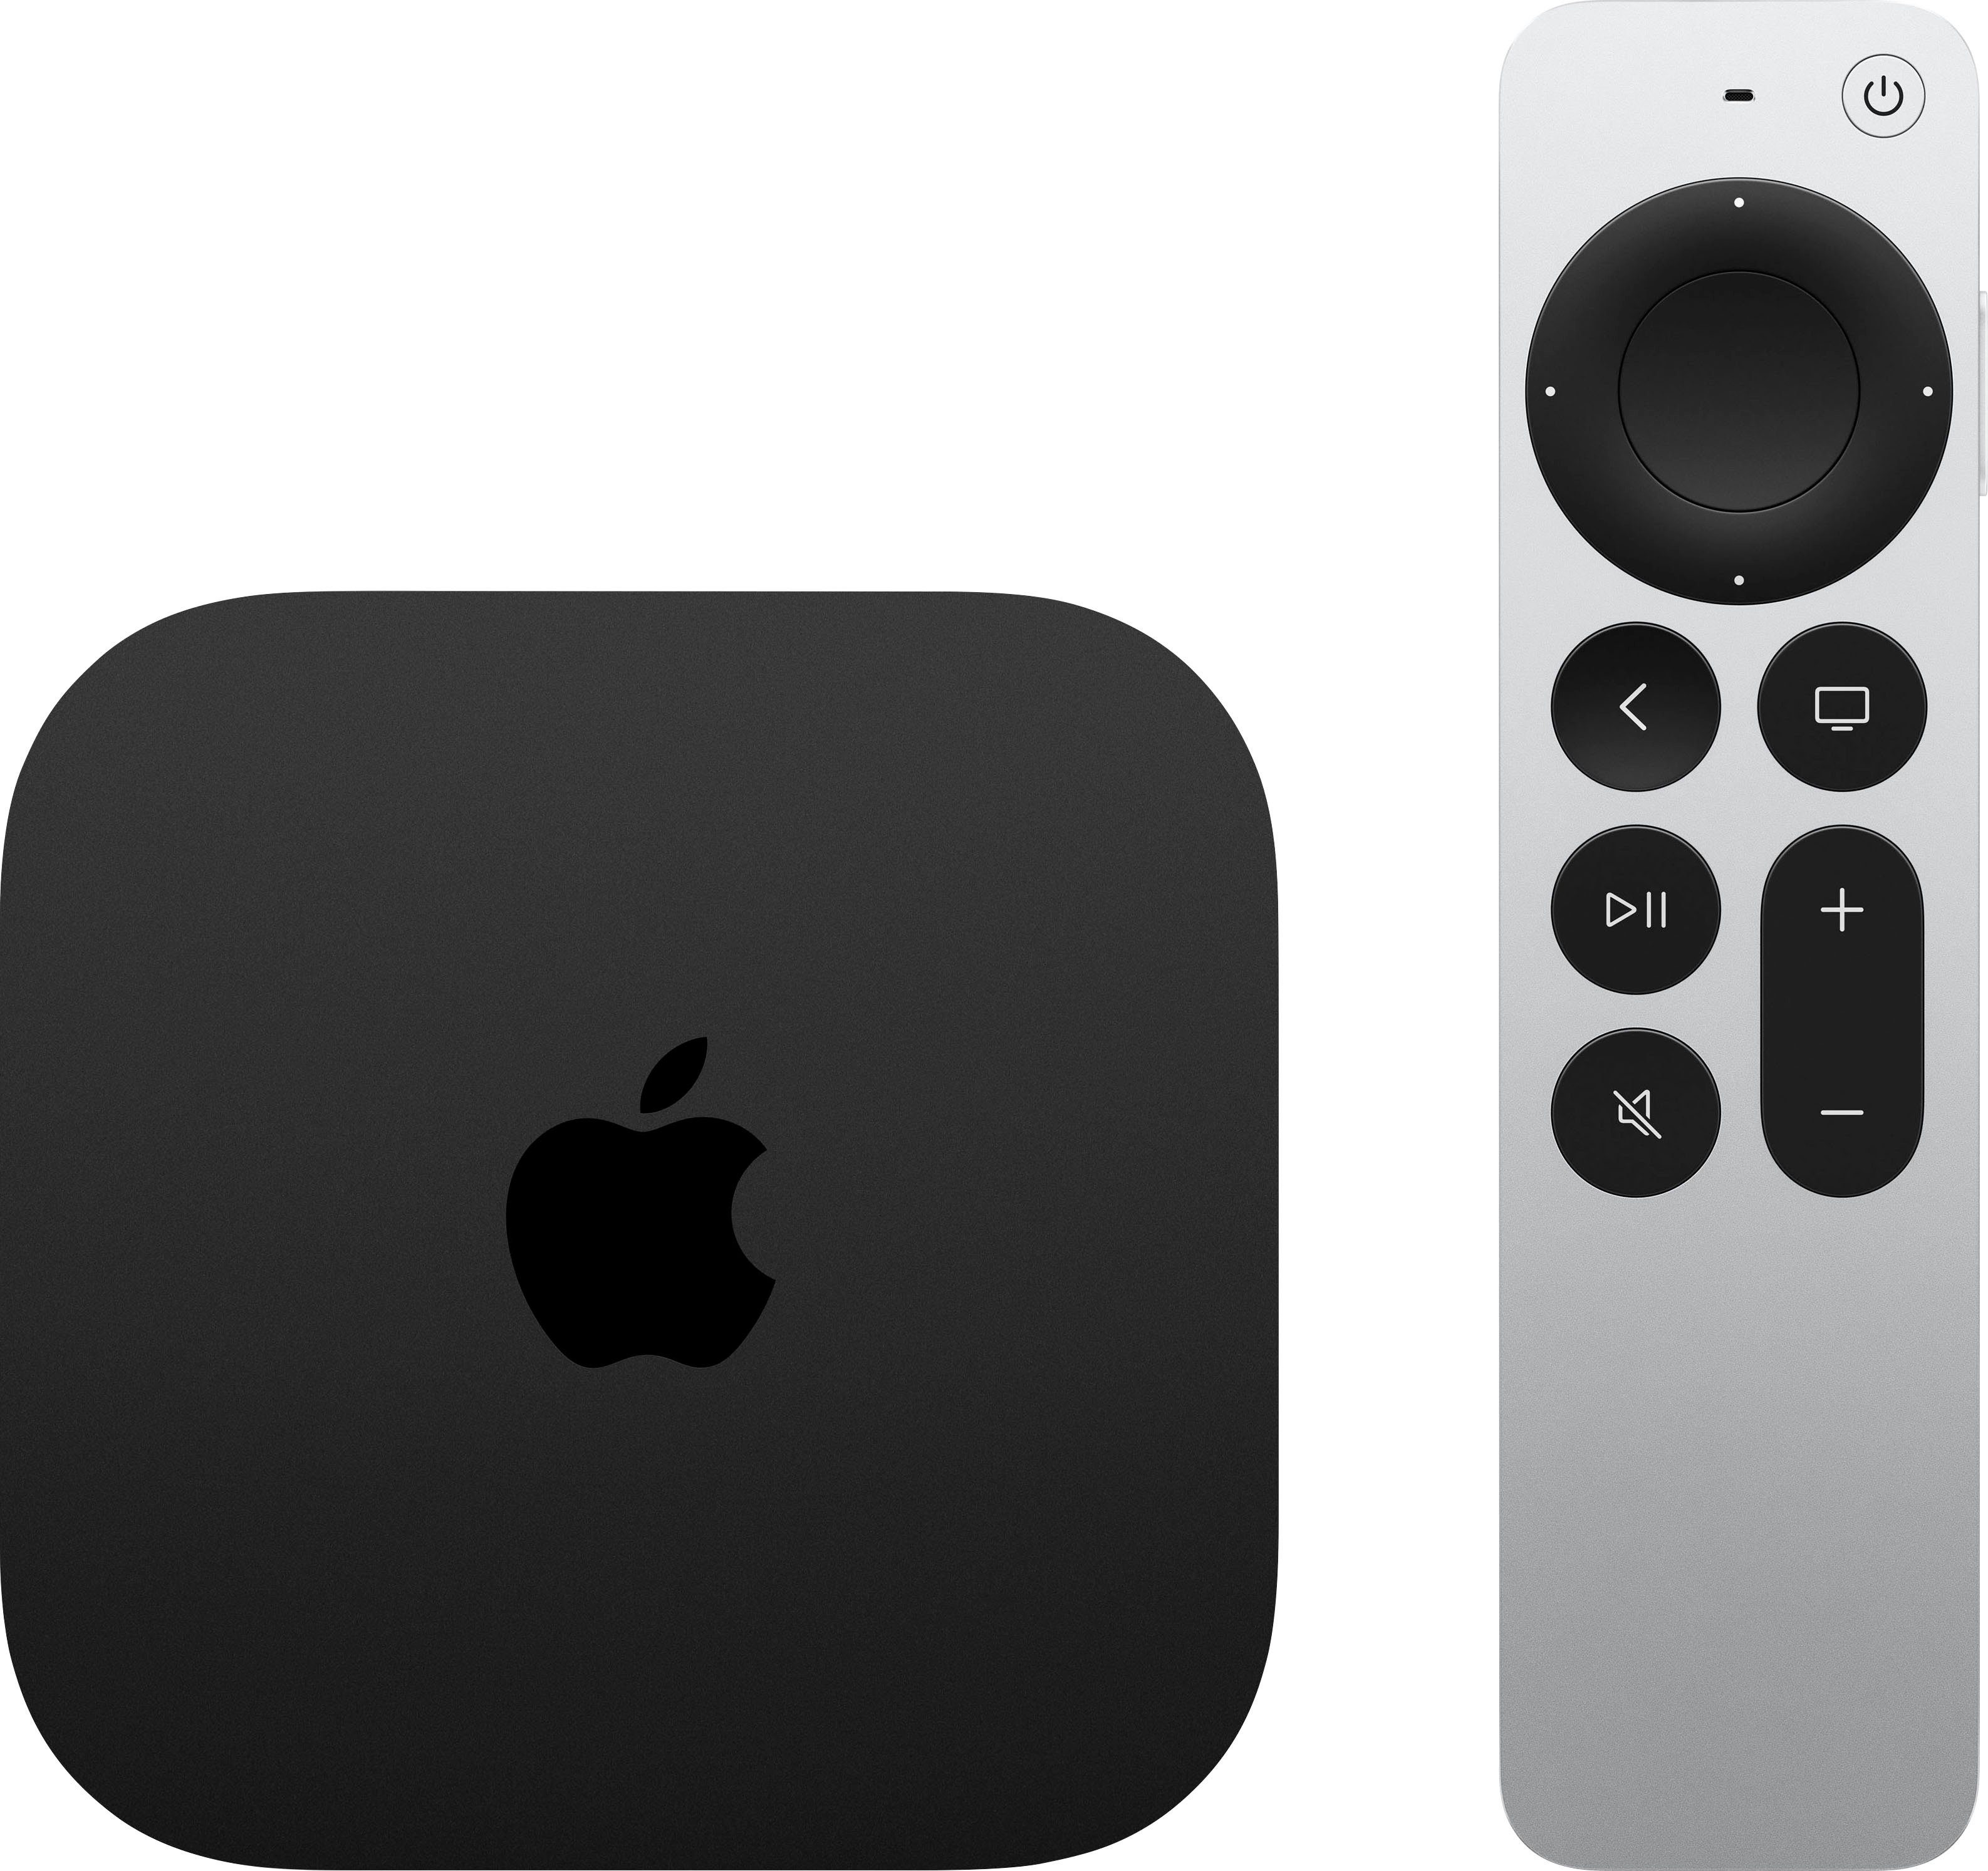 Gen) Apple Wi‑Fi + Ethernet 128GB (3rd TV 4K Streaming-Box